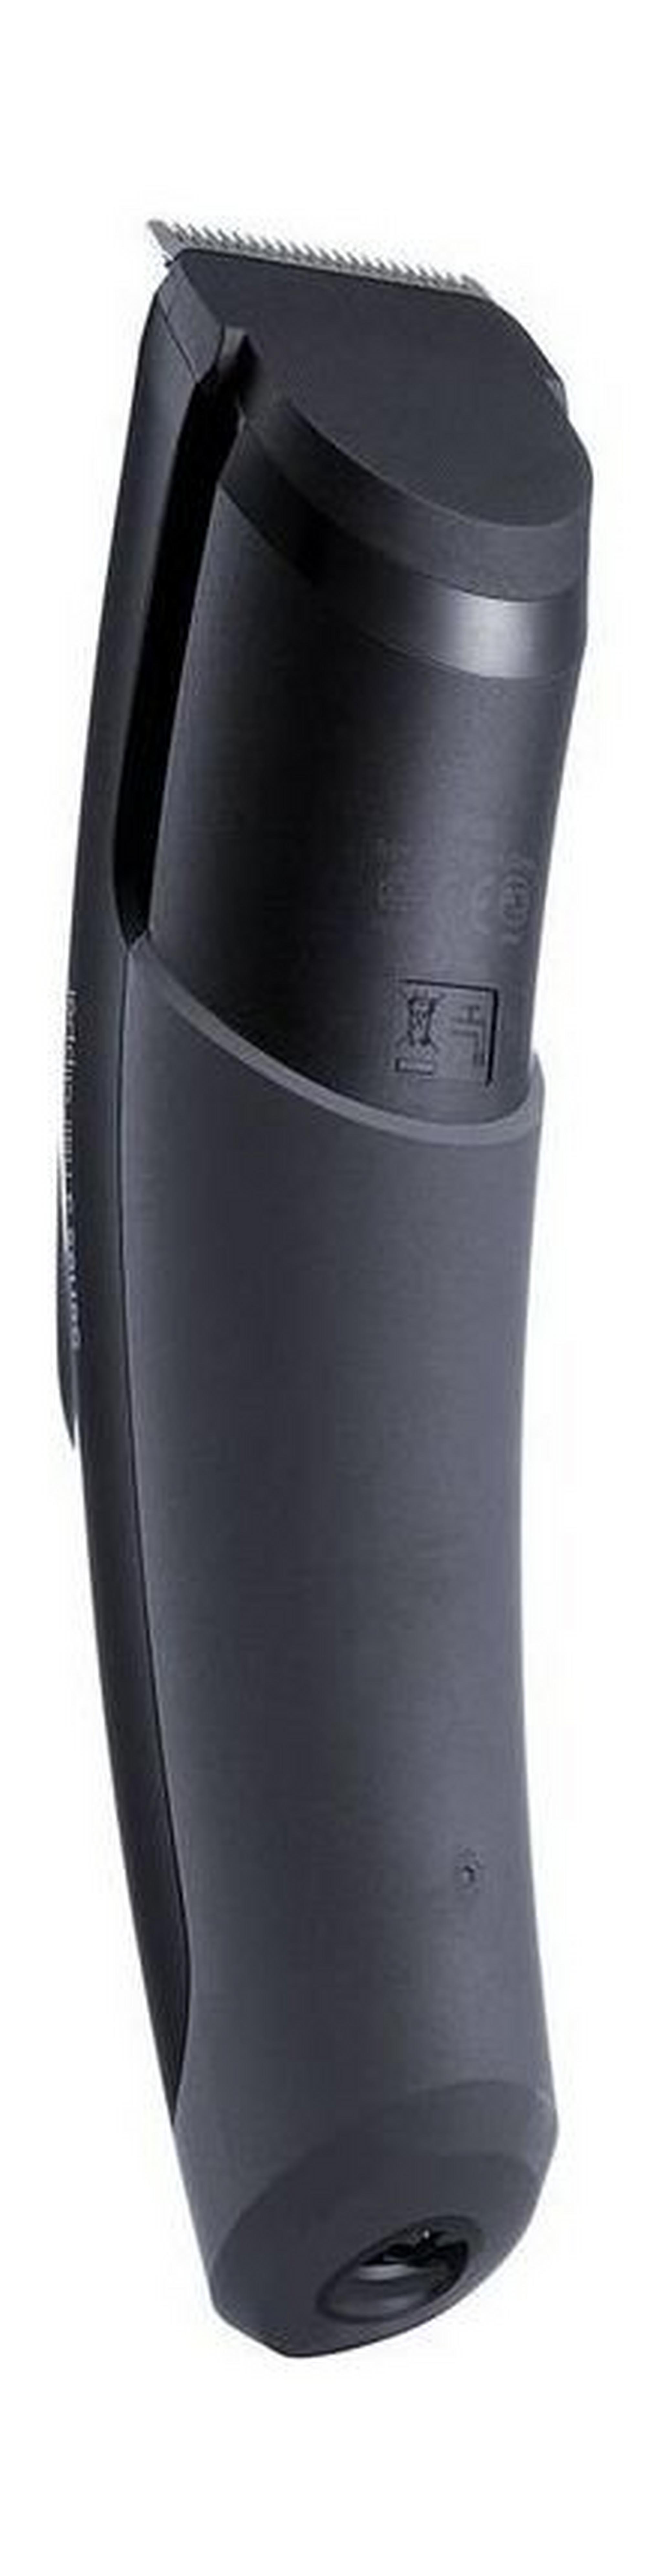 Braun HC5050 Series 5 Washable Travel Hair Trimmer - Black